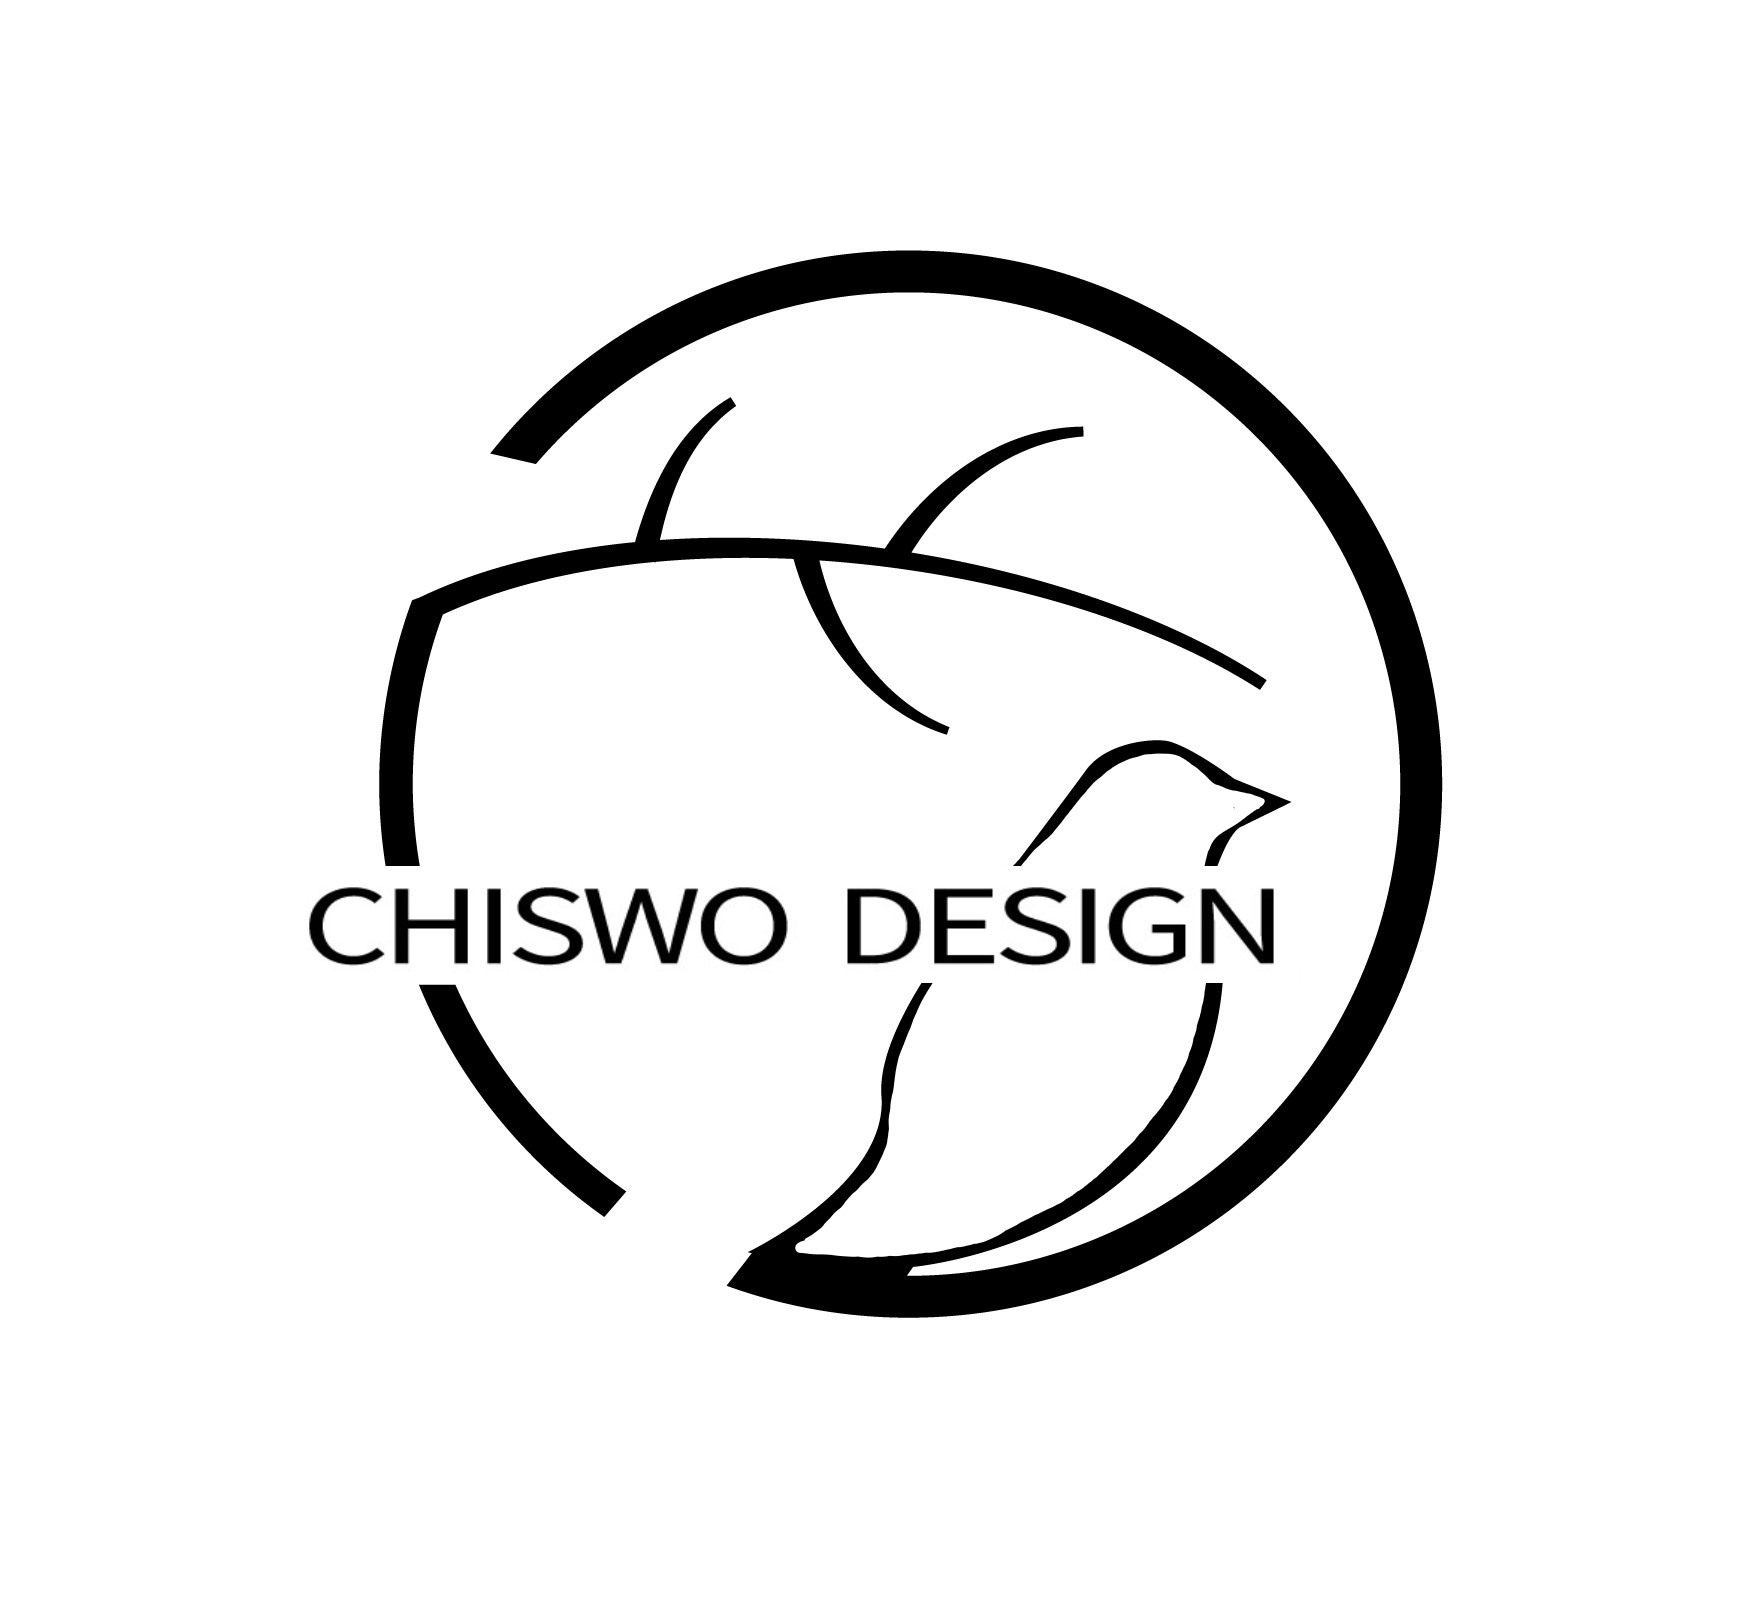 CHISWO DESIGN logo